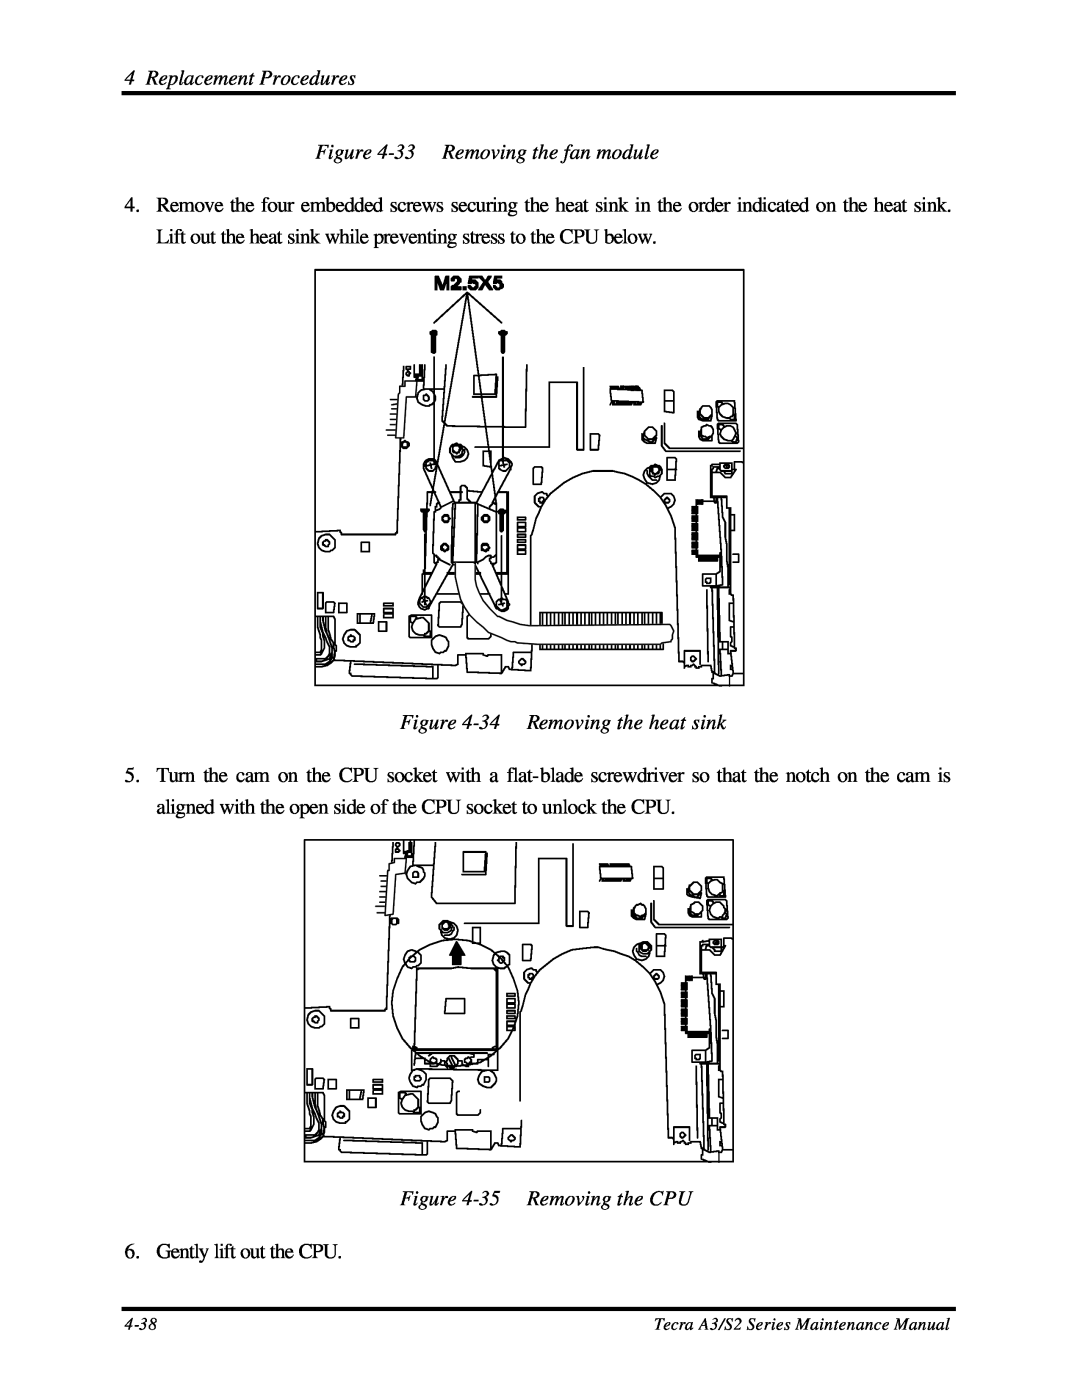 Toshiba S2 manual 33 Removing the fan module, 34 Removing the heat sink, 35 Removing the CPU, Replacement Procedures 